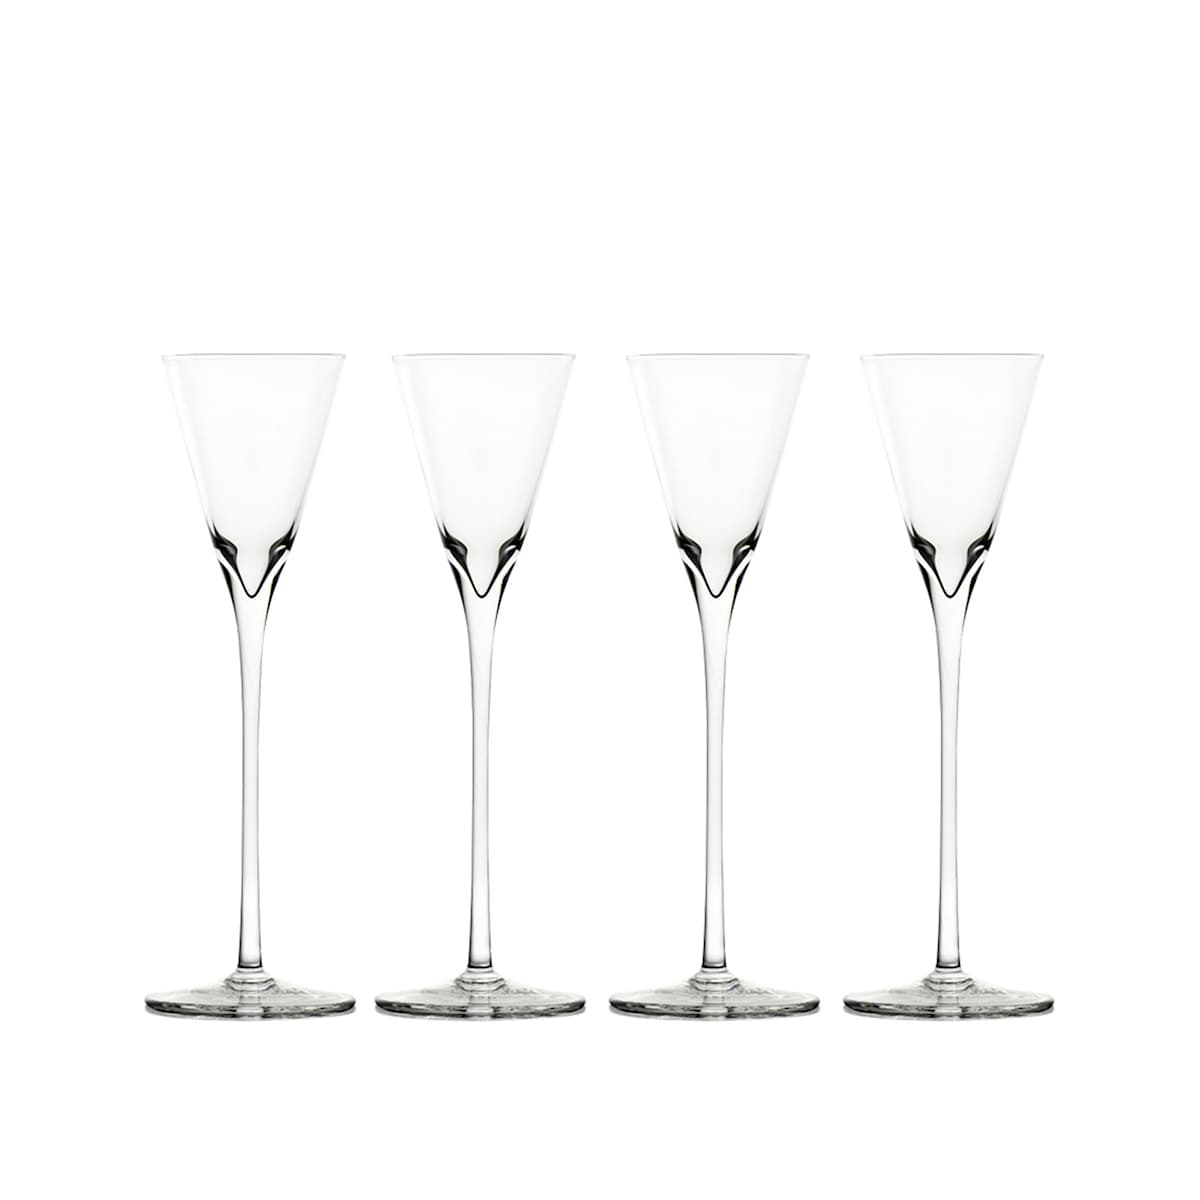 Fritz Crystal Stemless Martini Glass